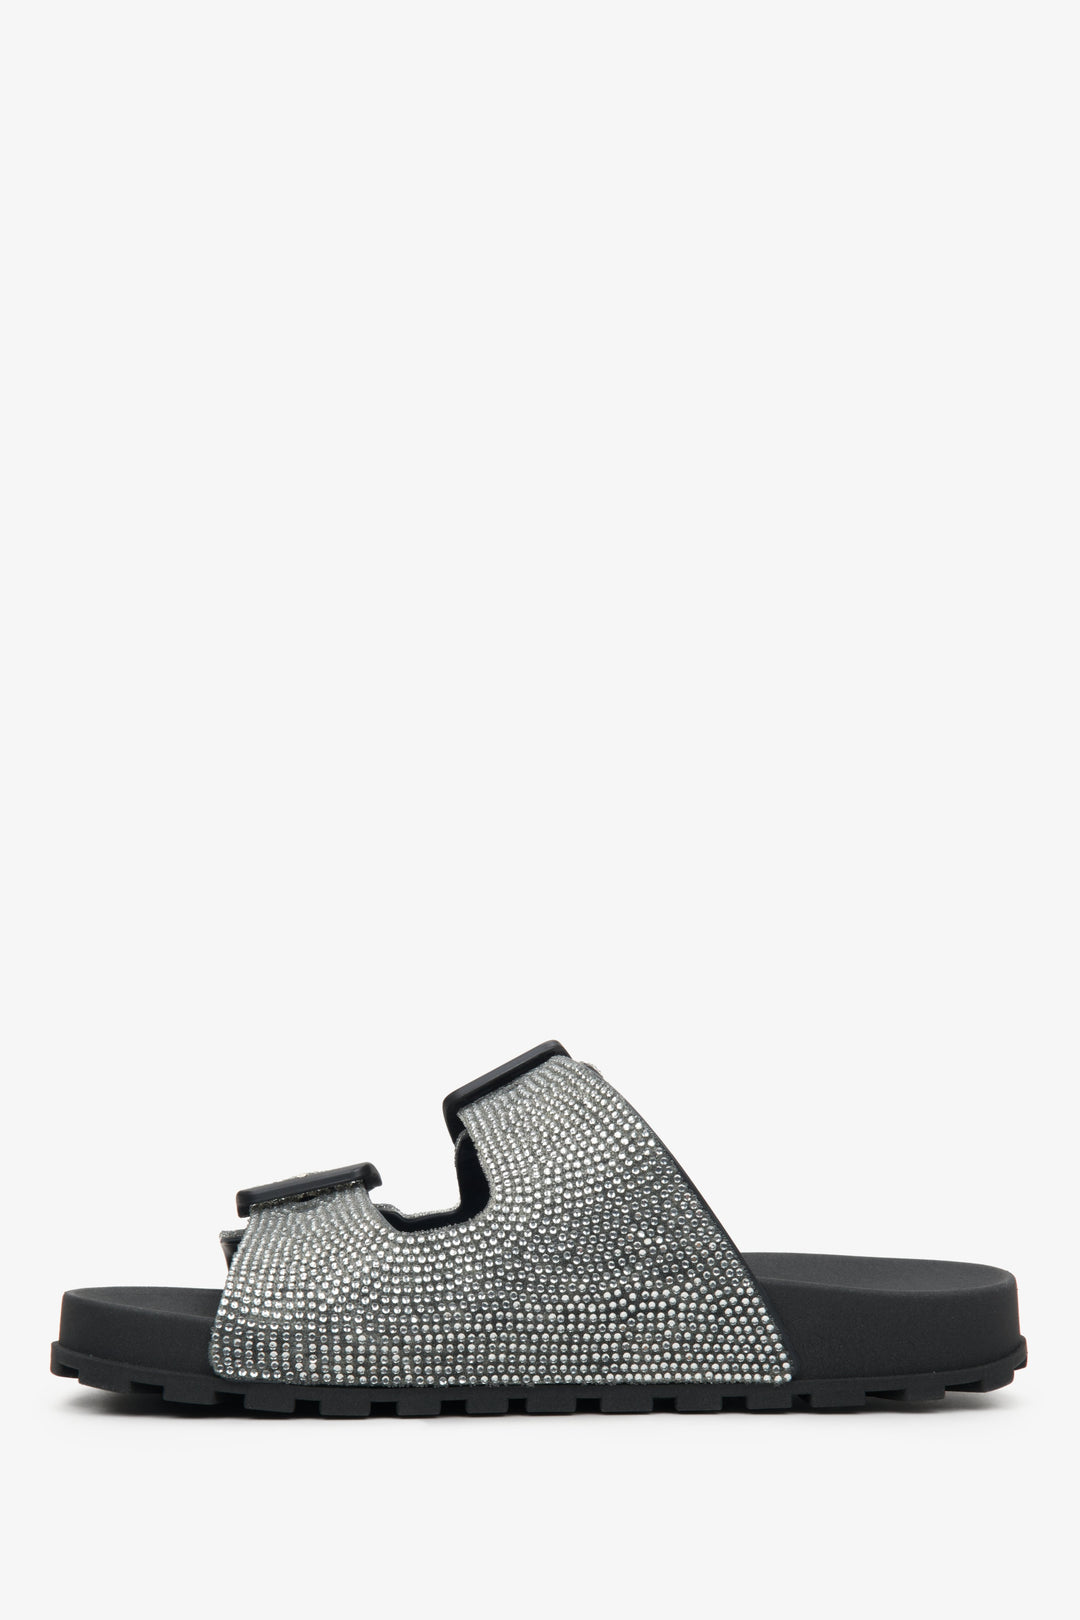 Women's black rubber flip-flops with decorative rhinestones by Estro - shoe profile.